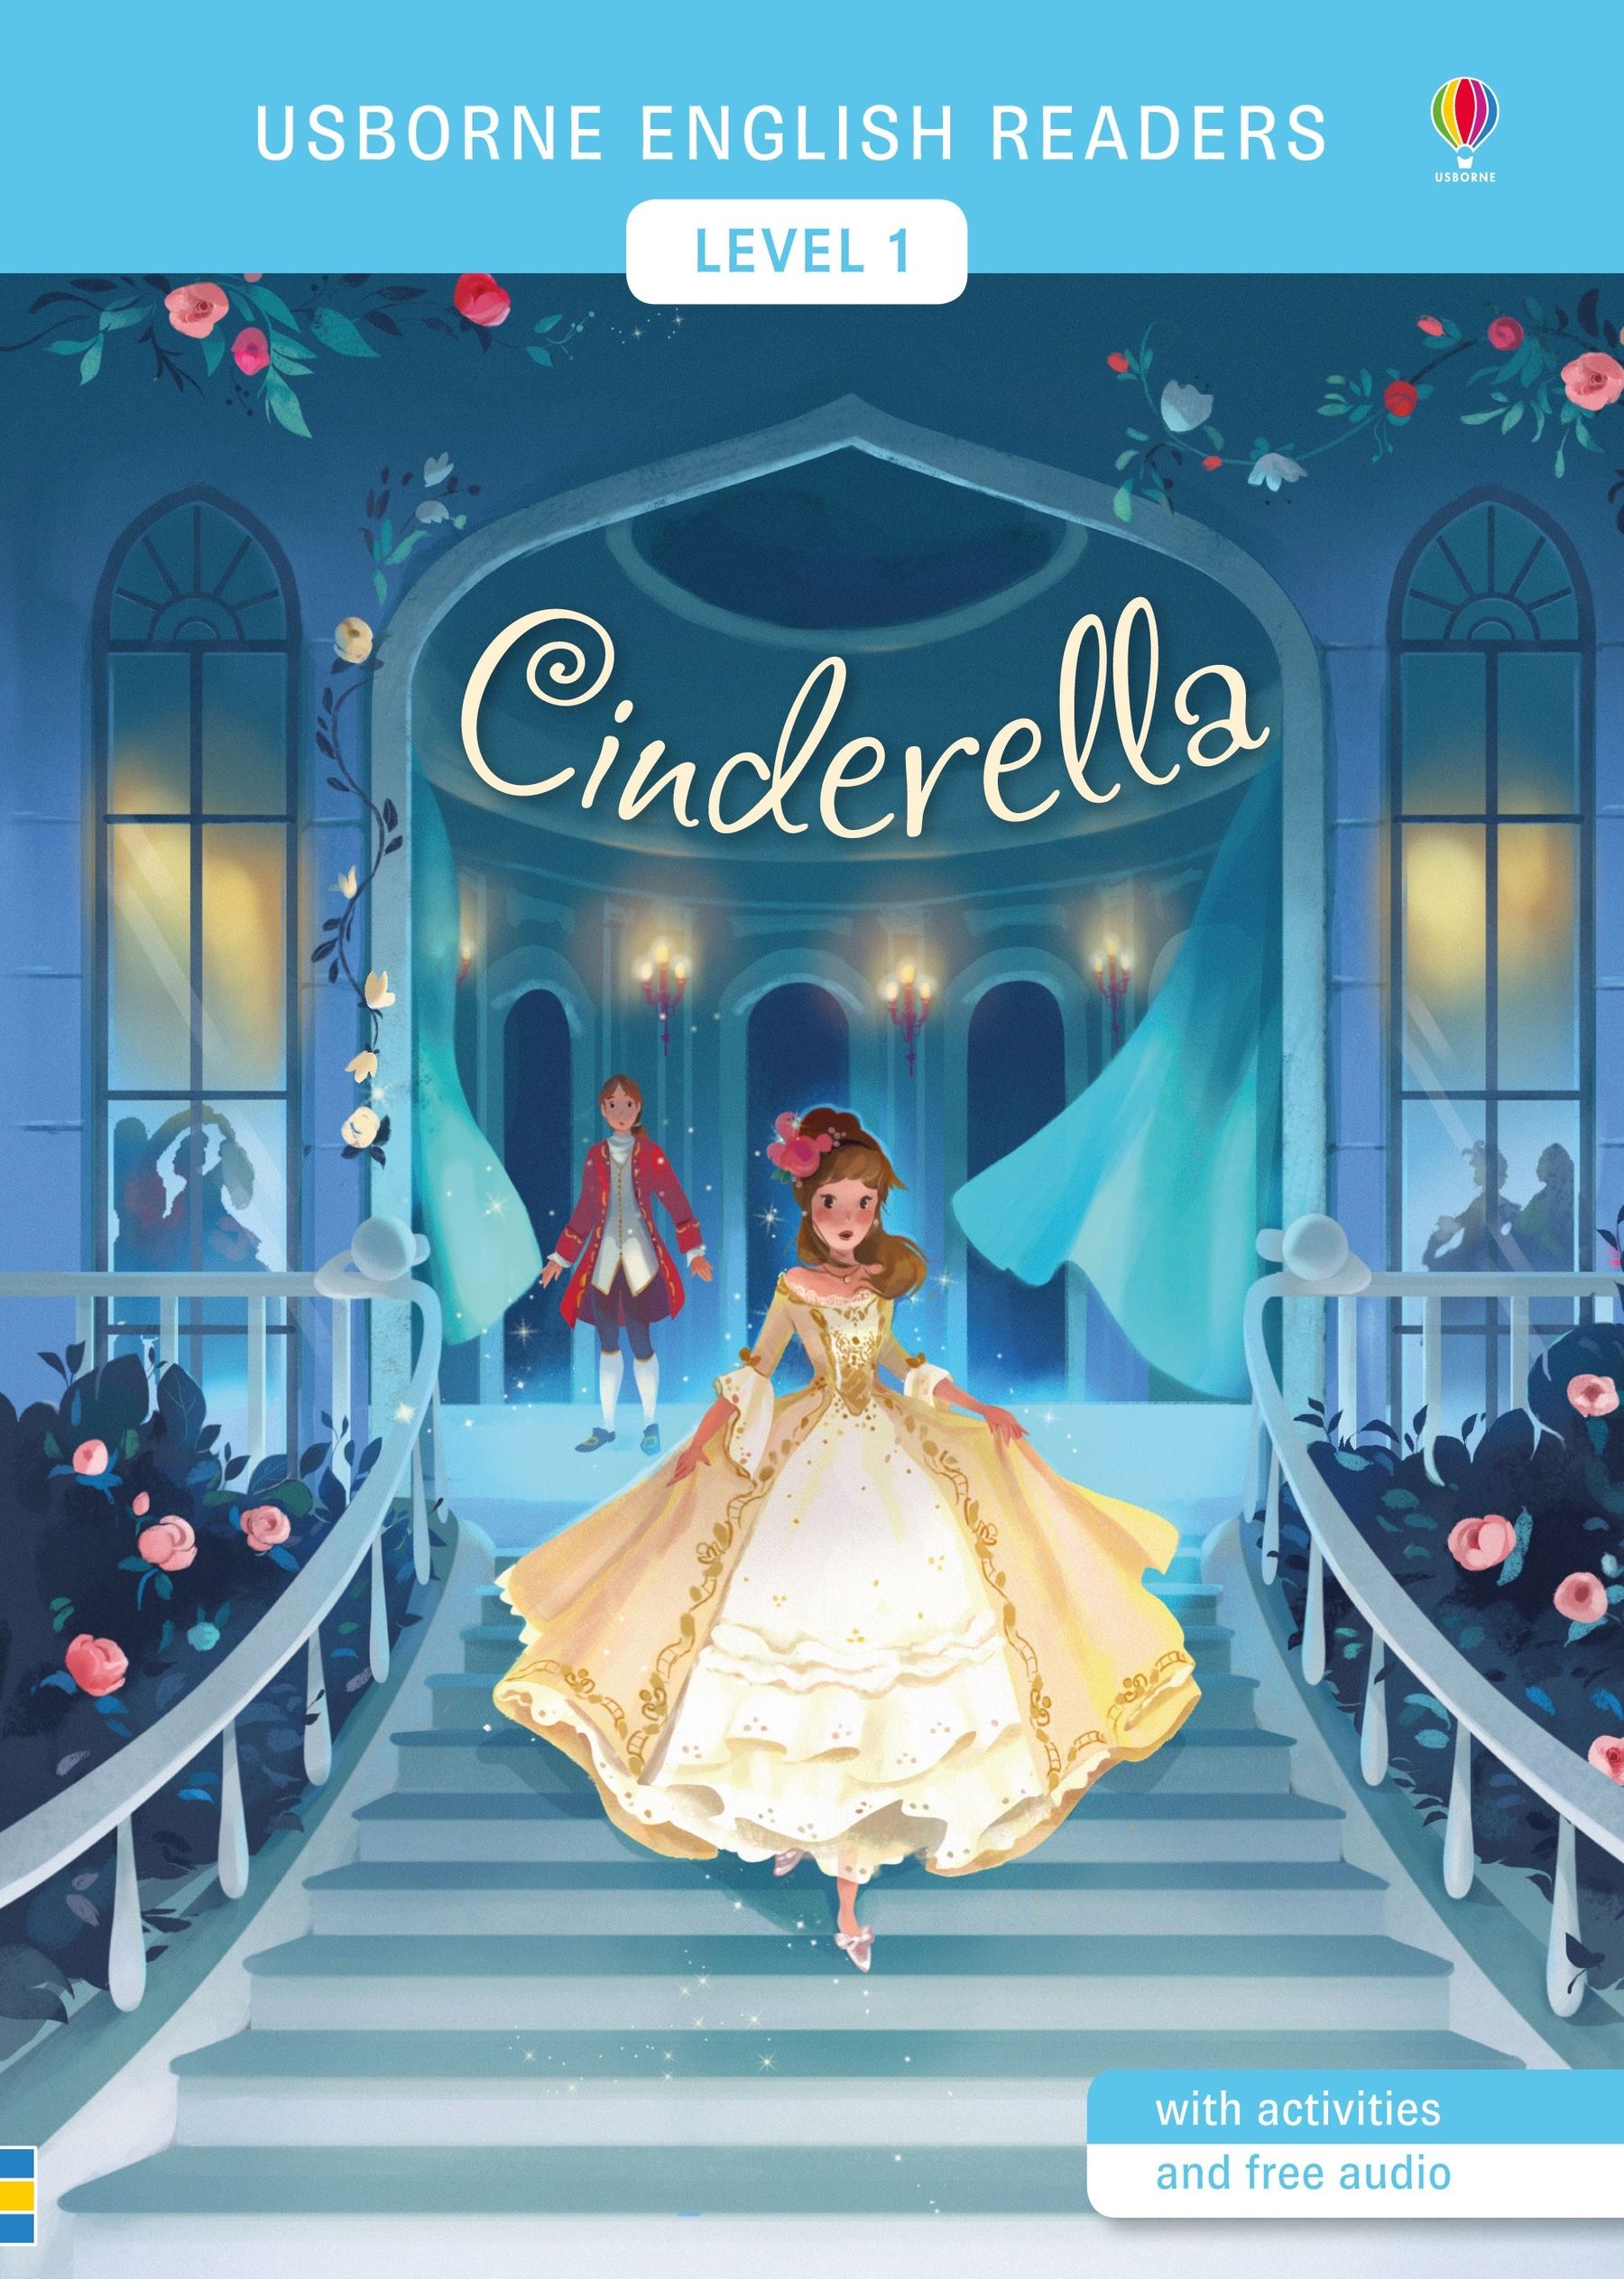 Usborne English Reading: Cinderella